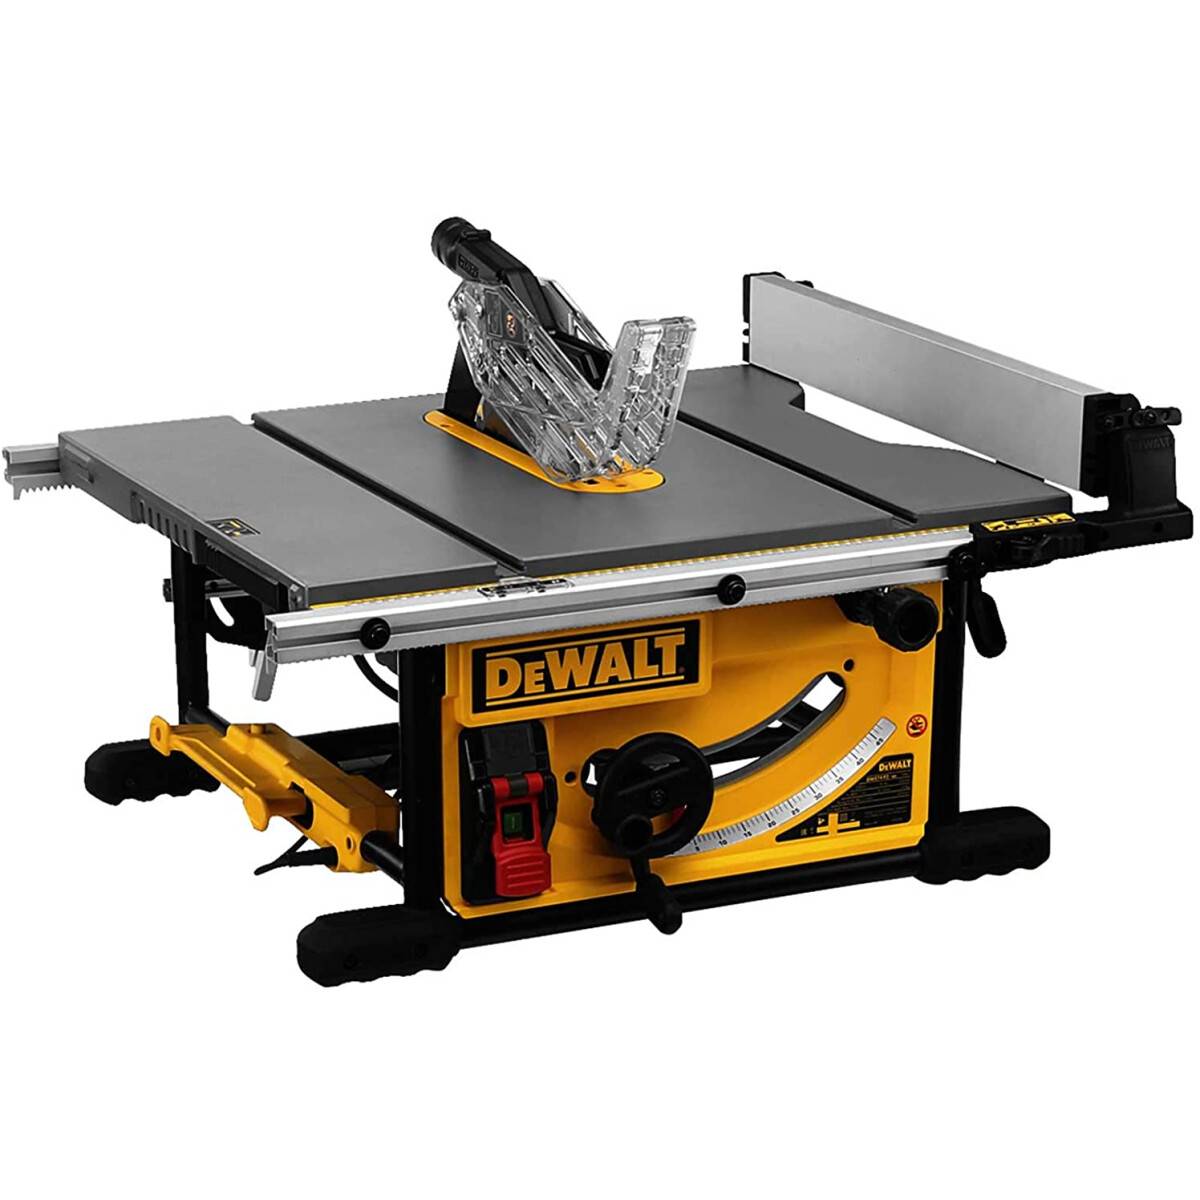 Dewalt DWE7492-GB 240V 250mm Portable Table Saw with DWE74912 Scissor Stand  from Lawson HIS